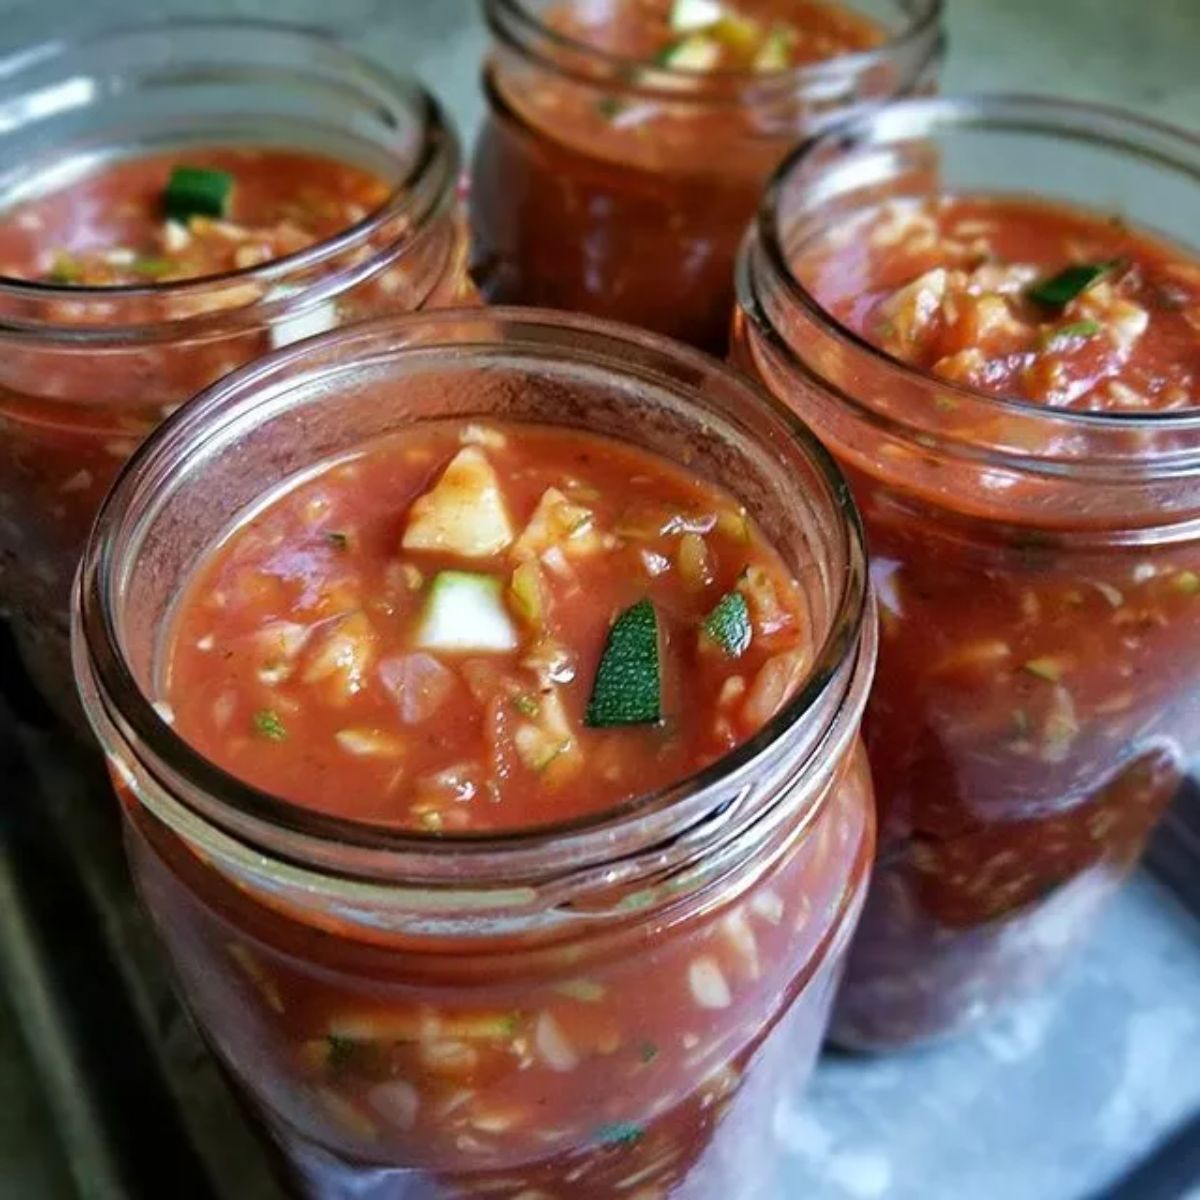 Homemade zucchini tomato sauce in four glass jars.